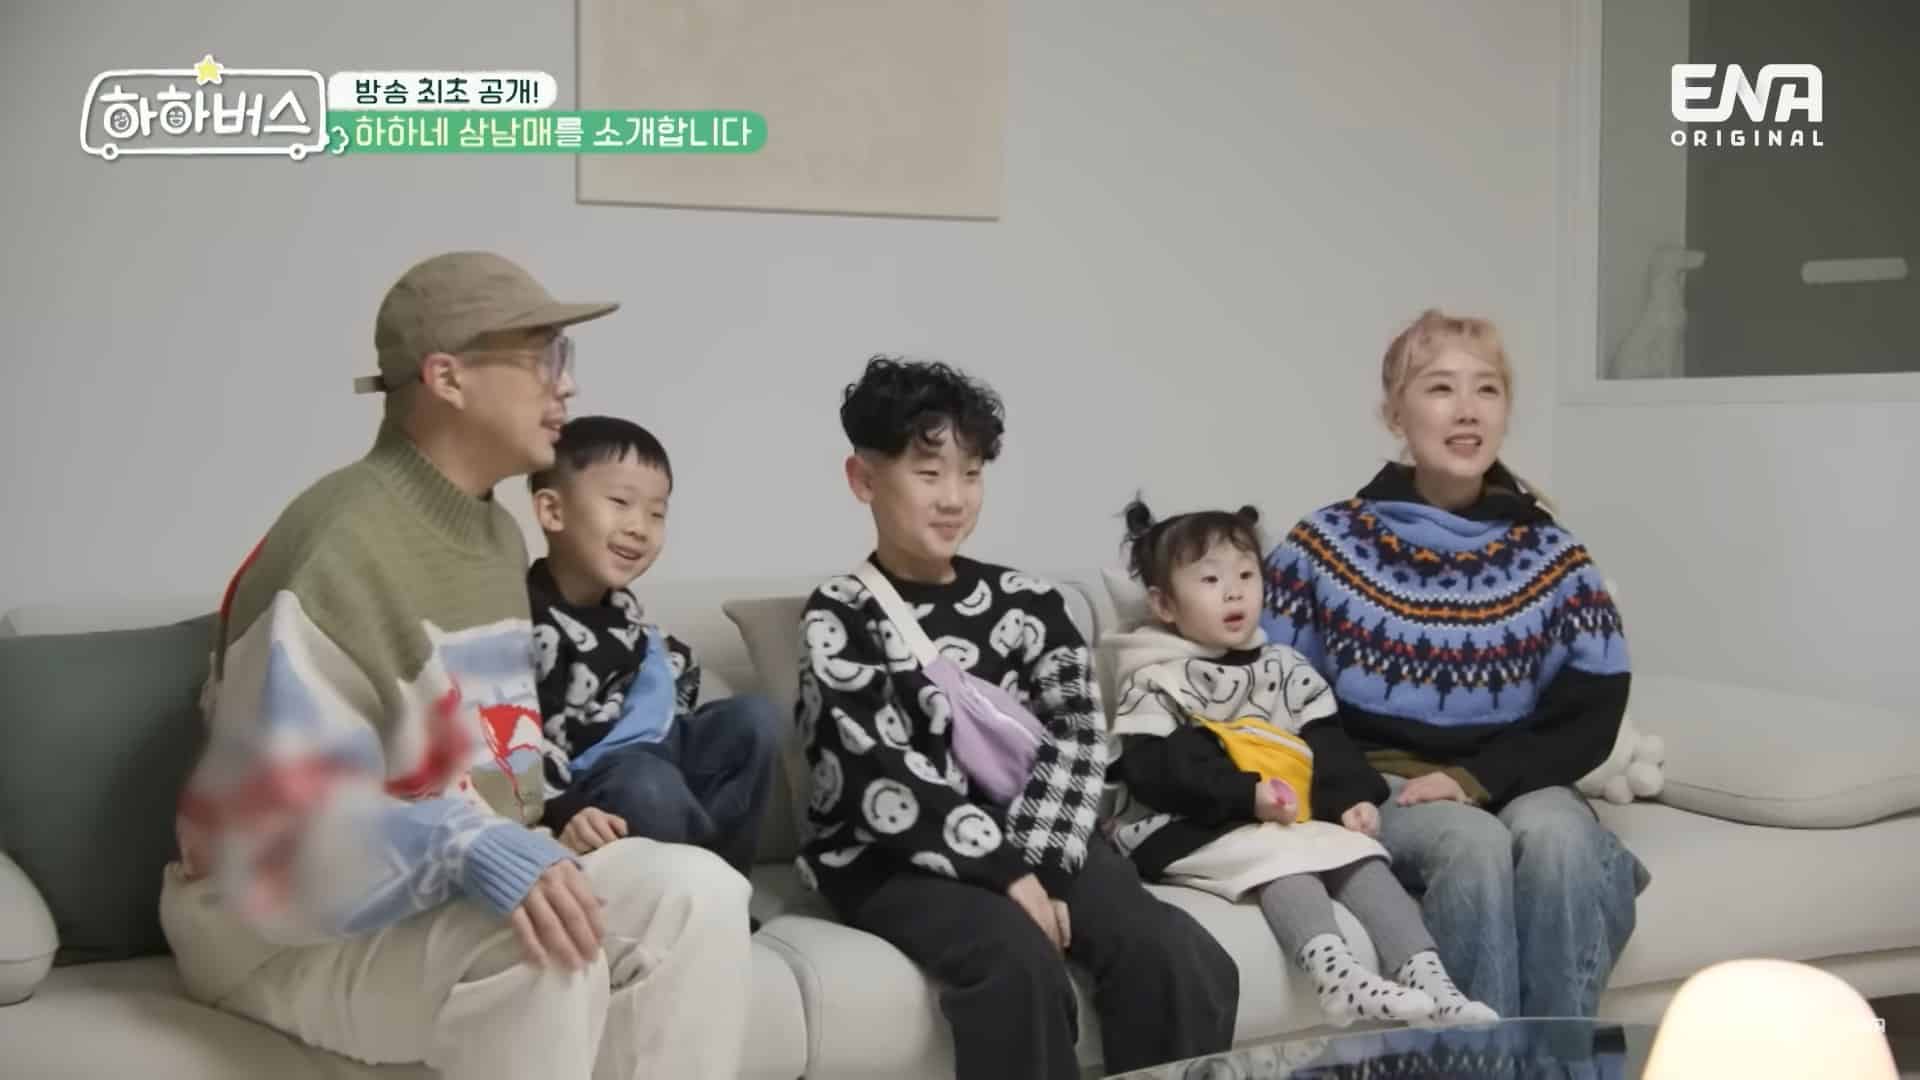 Ha Ha Bus: Ha Ha, Byul and their three children